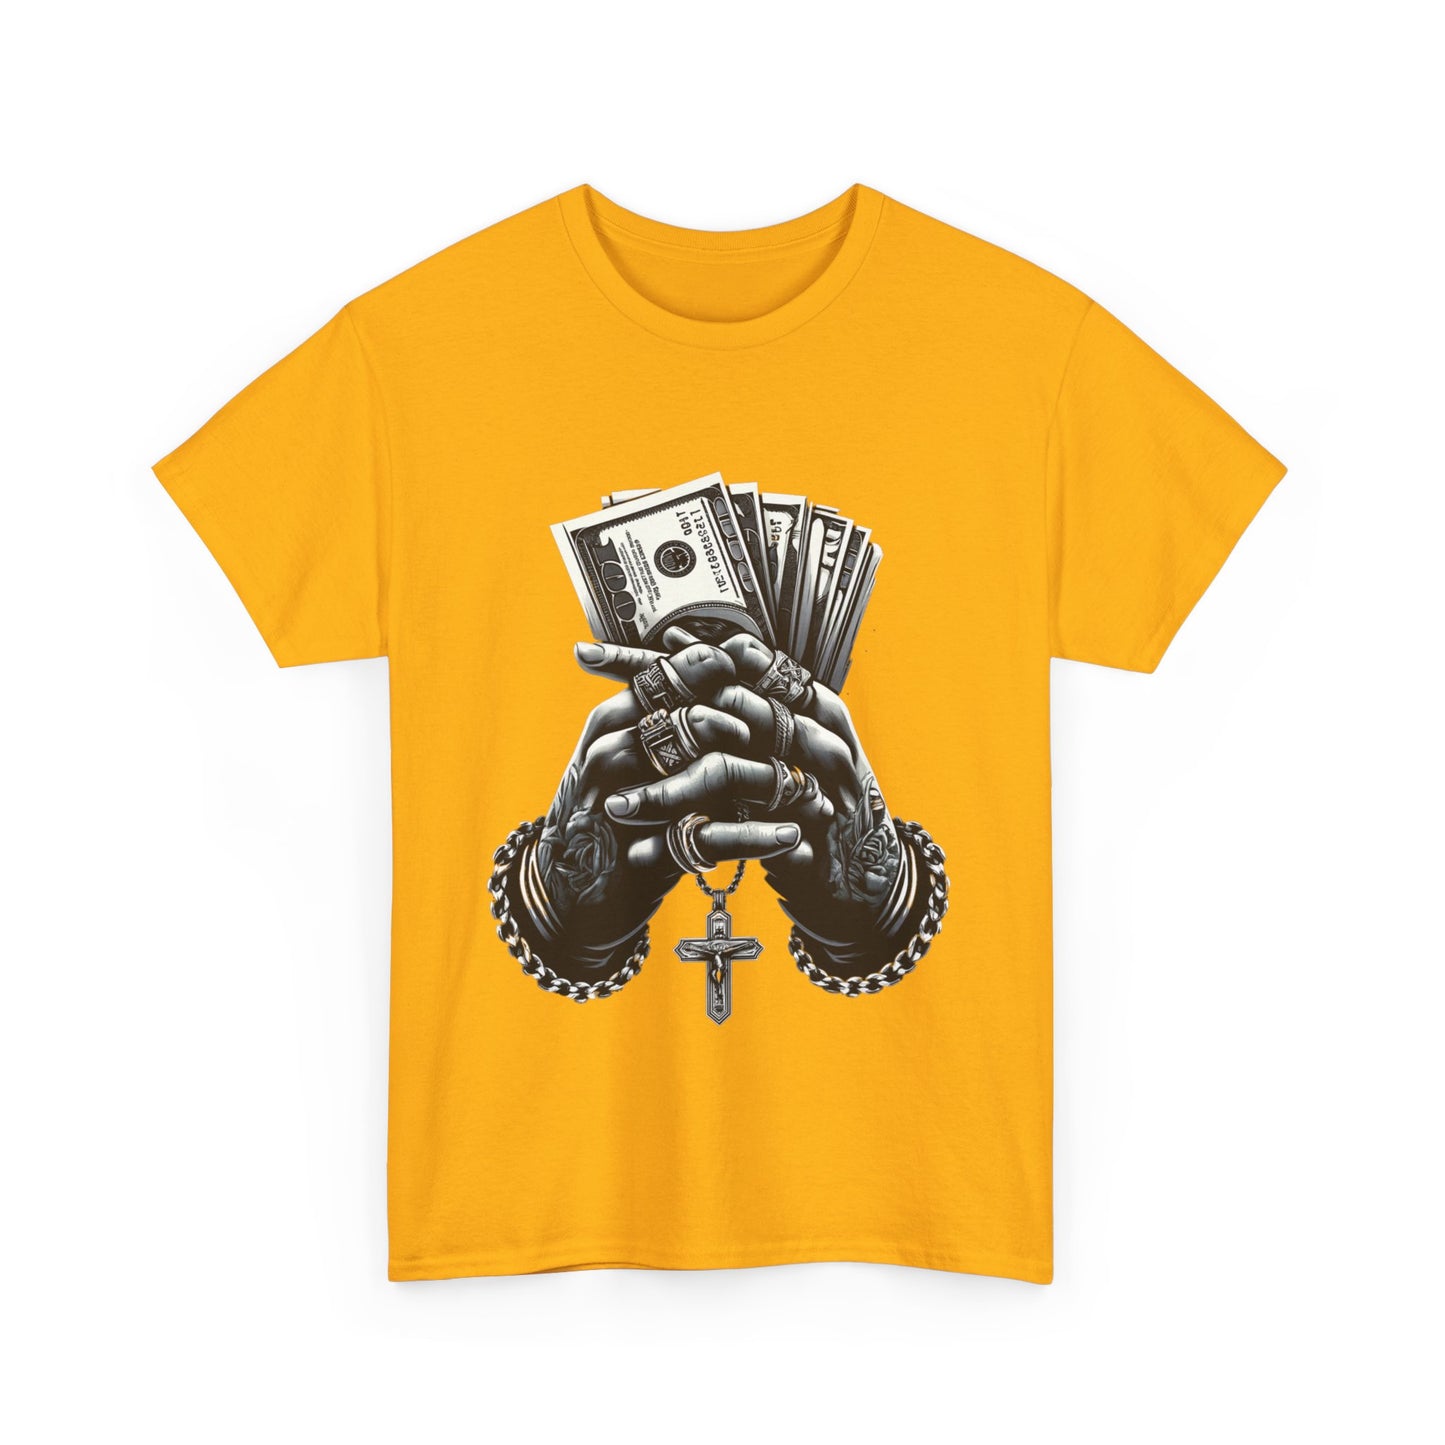 Y.M.L.Y. "Power & Faith" T-Shirt The Money Way T-Shirt Urban T-Shirt Street Wear Ballers Wear Hip Hop Clothing